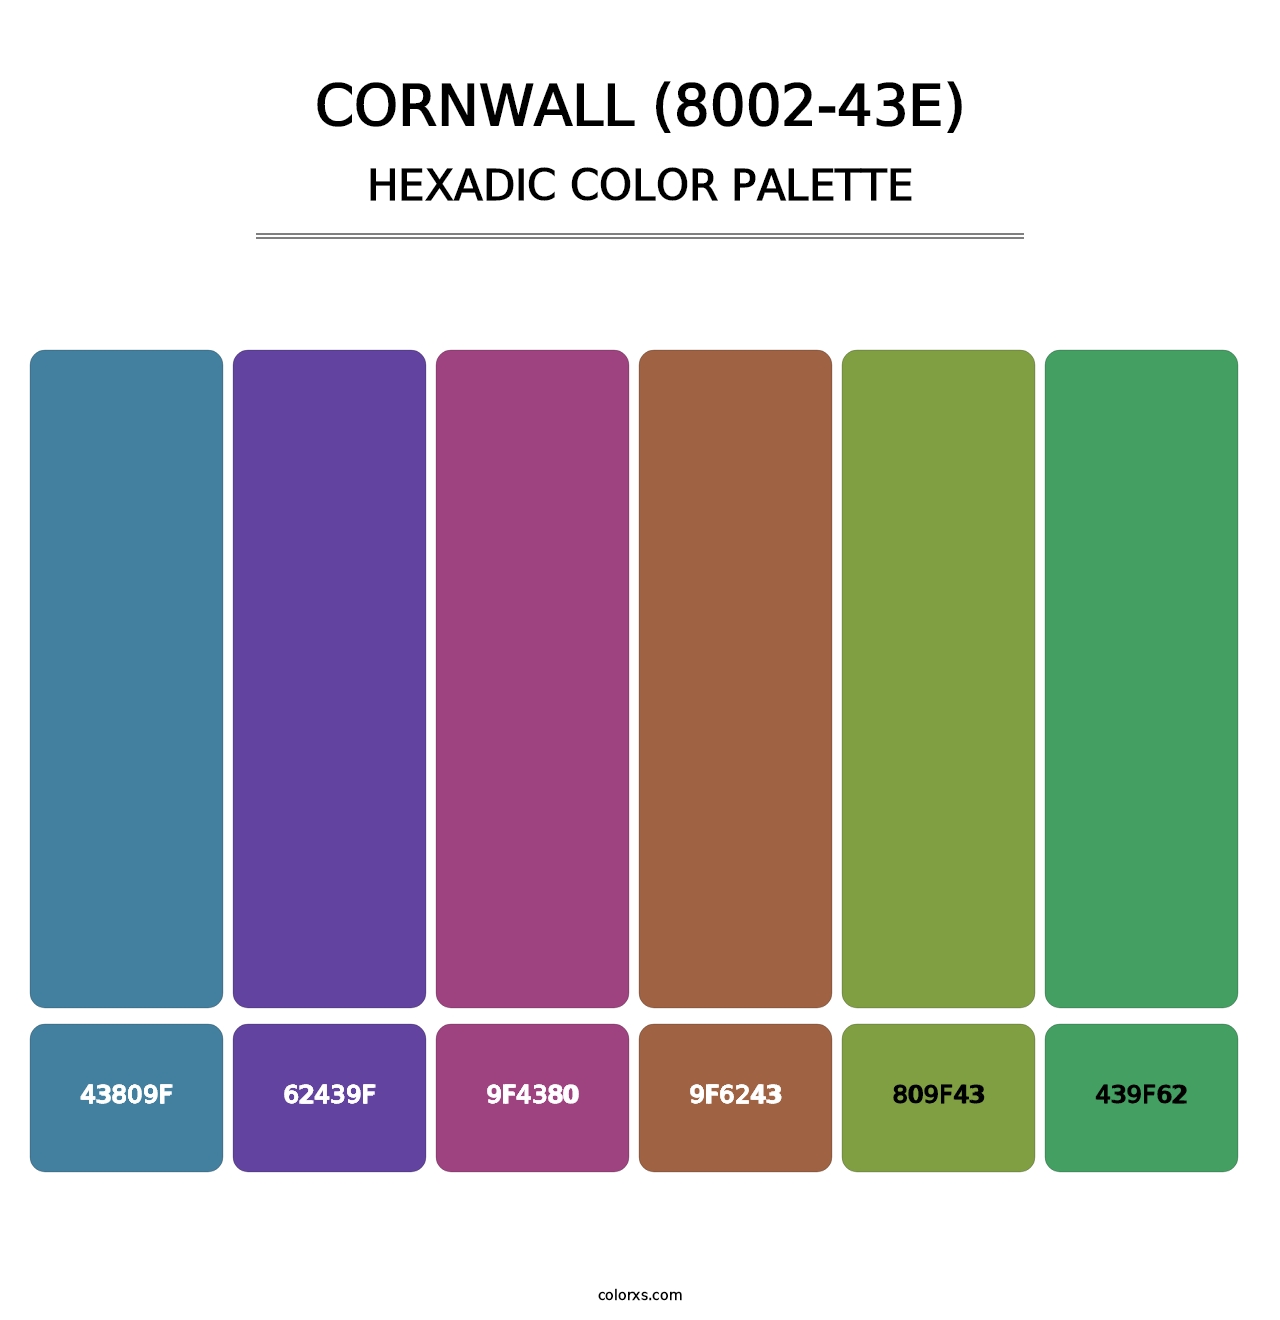 Cornwall (8002-43E) - Hexadic Color Palette